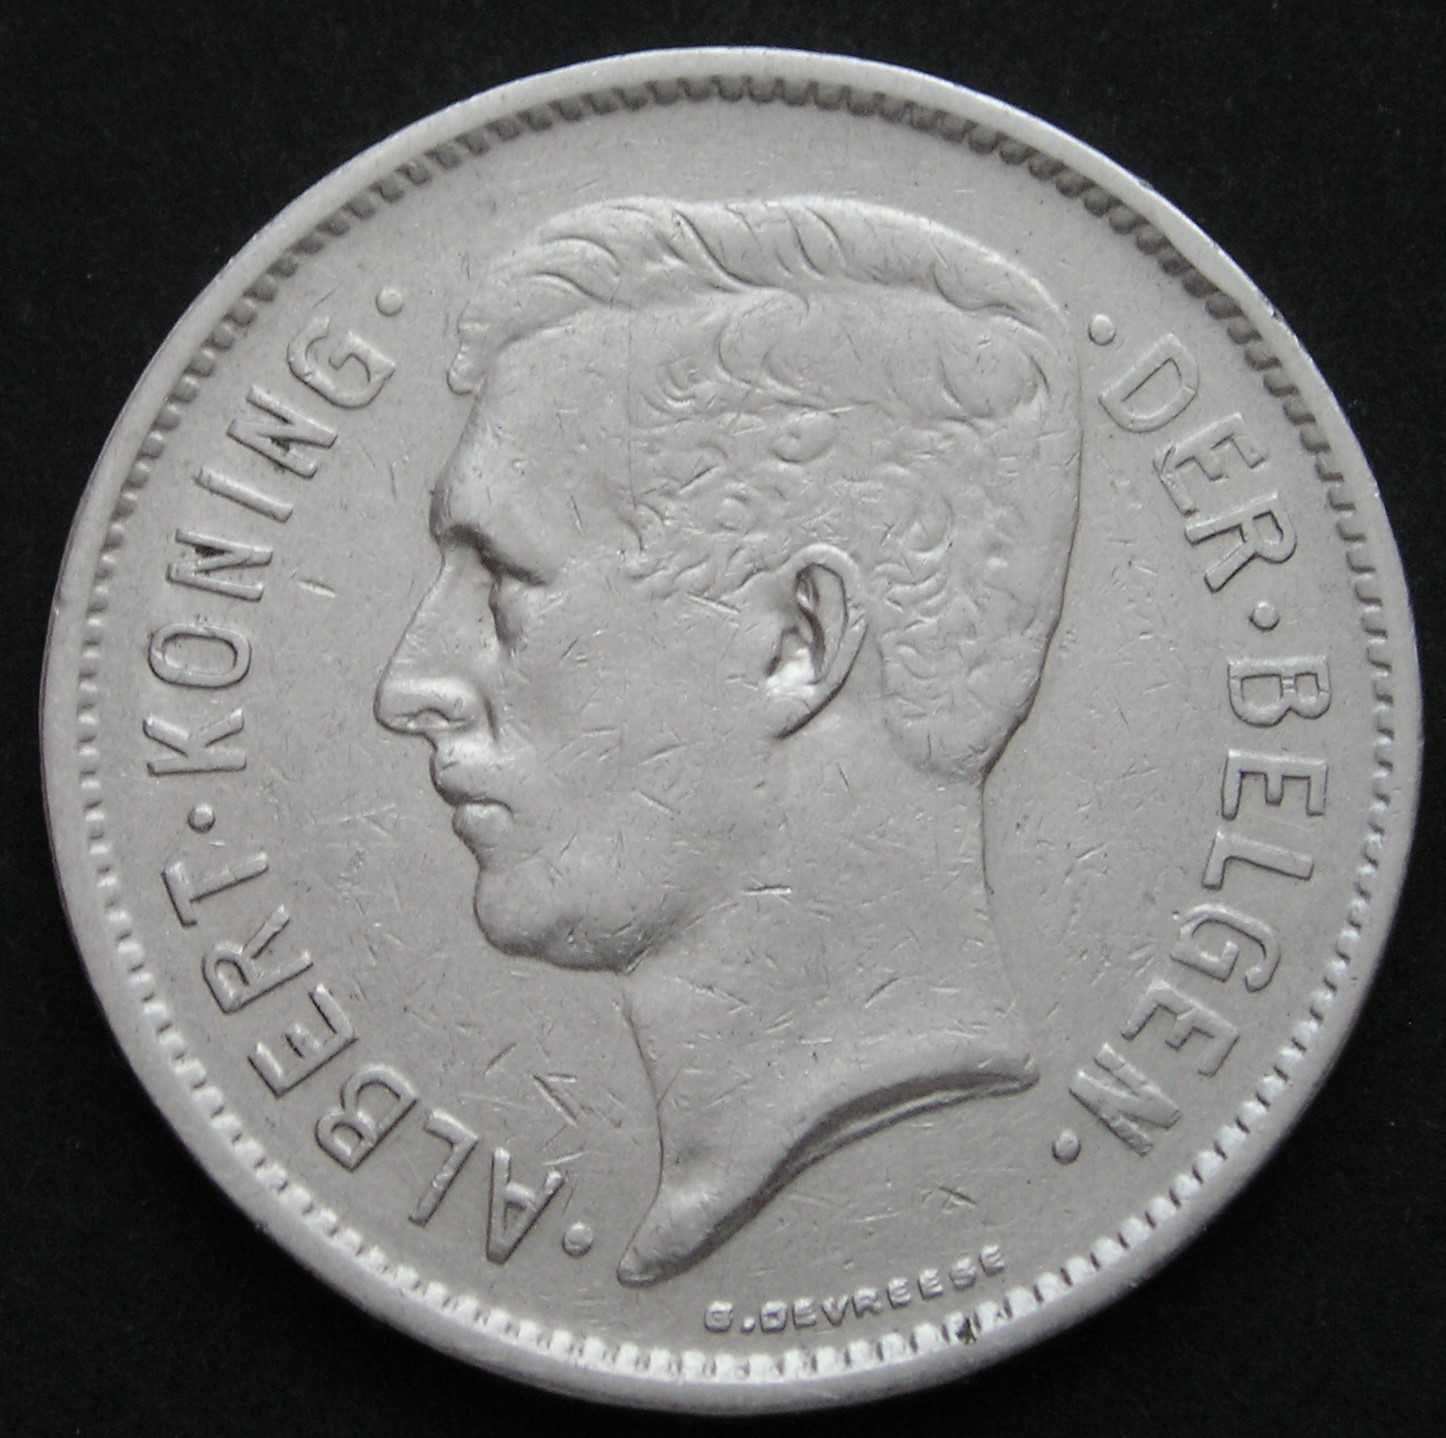 Belgia 5 franków 1931 - król Albert